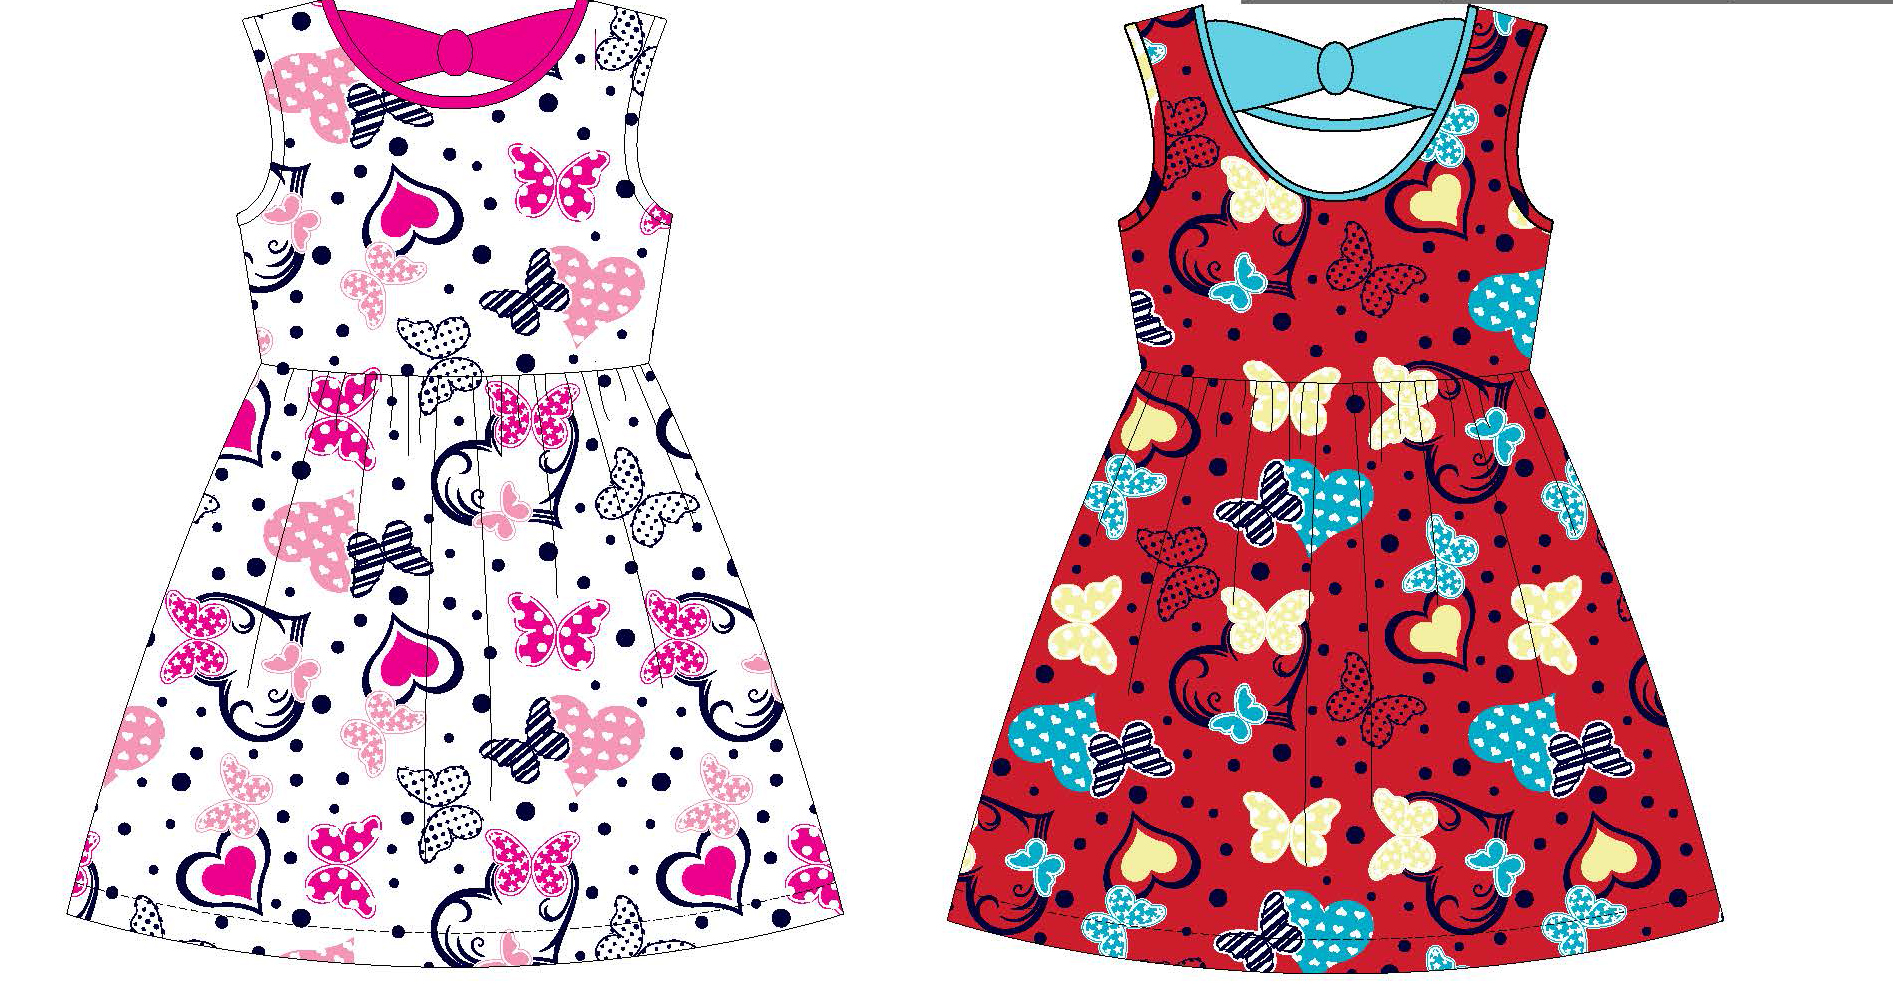 Baby Girl's Sleeveless Knit Swing DRESS w/ Butterfly & Heart Print - Size 0/3M-9M